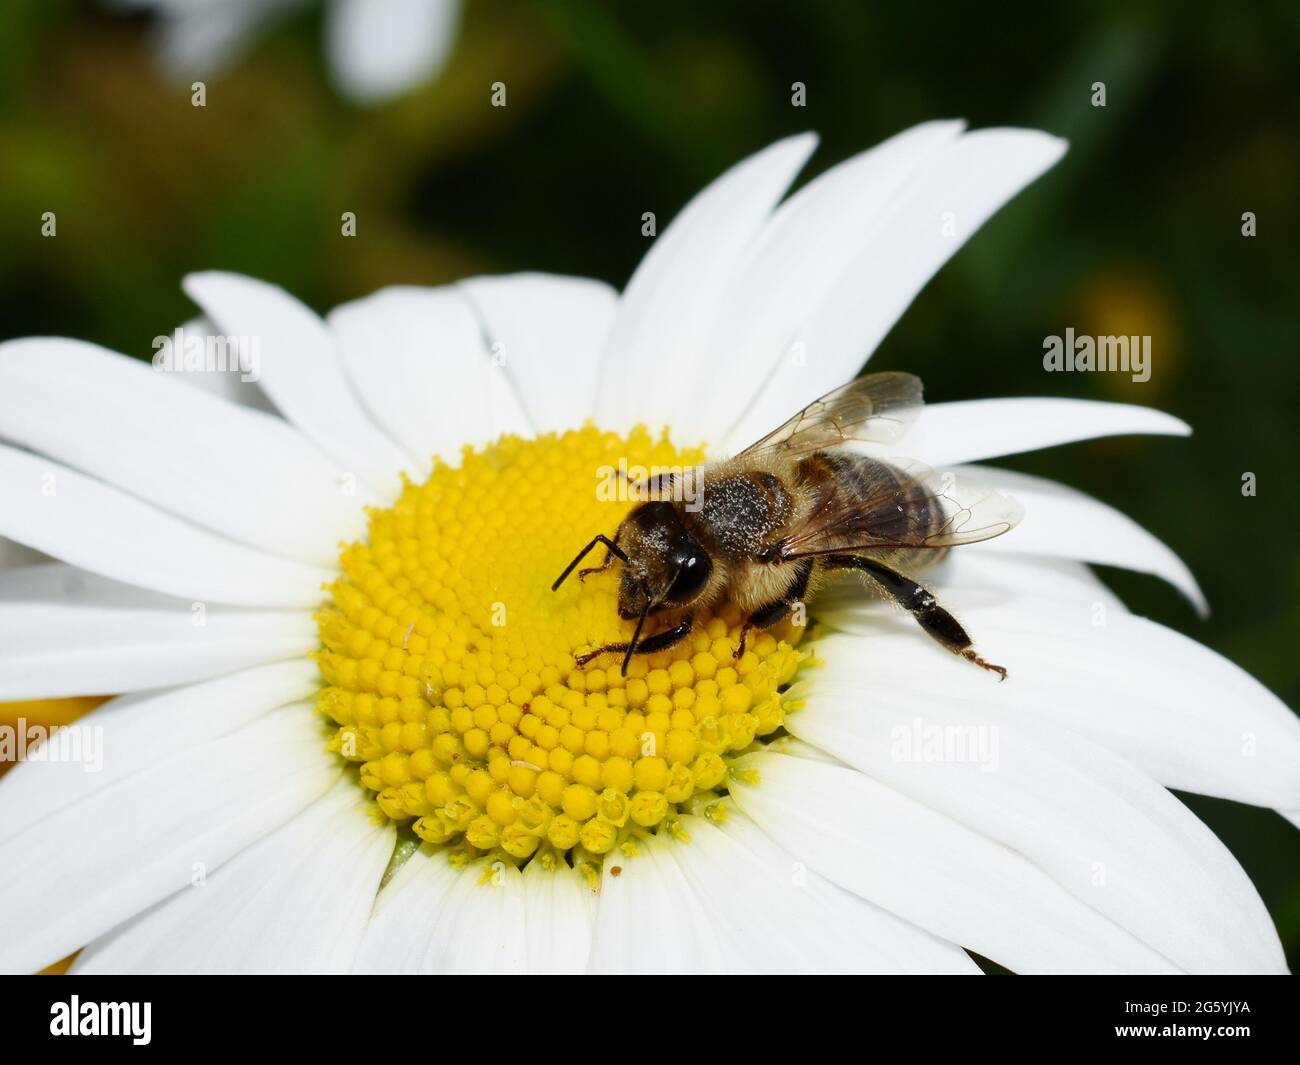 European honey bee Apis mellifera on a daisy flower Stock Photo